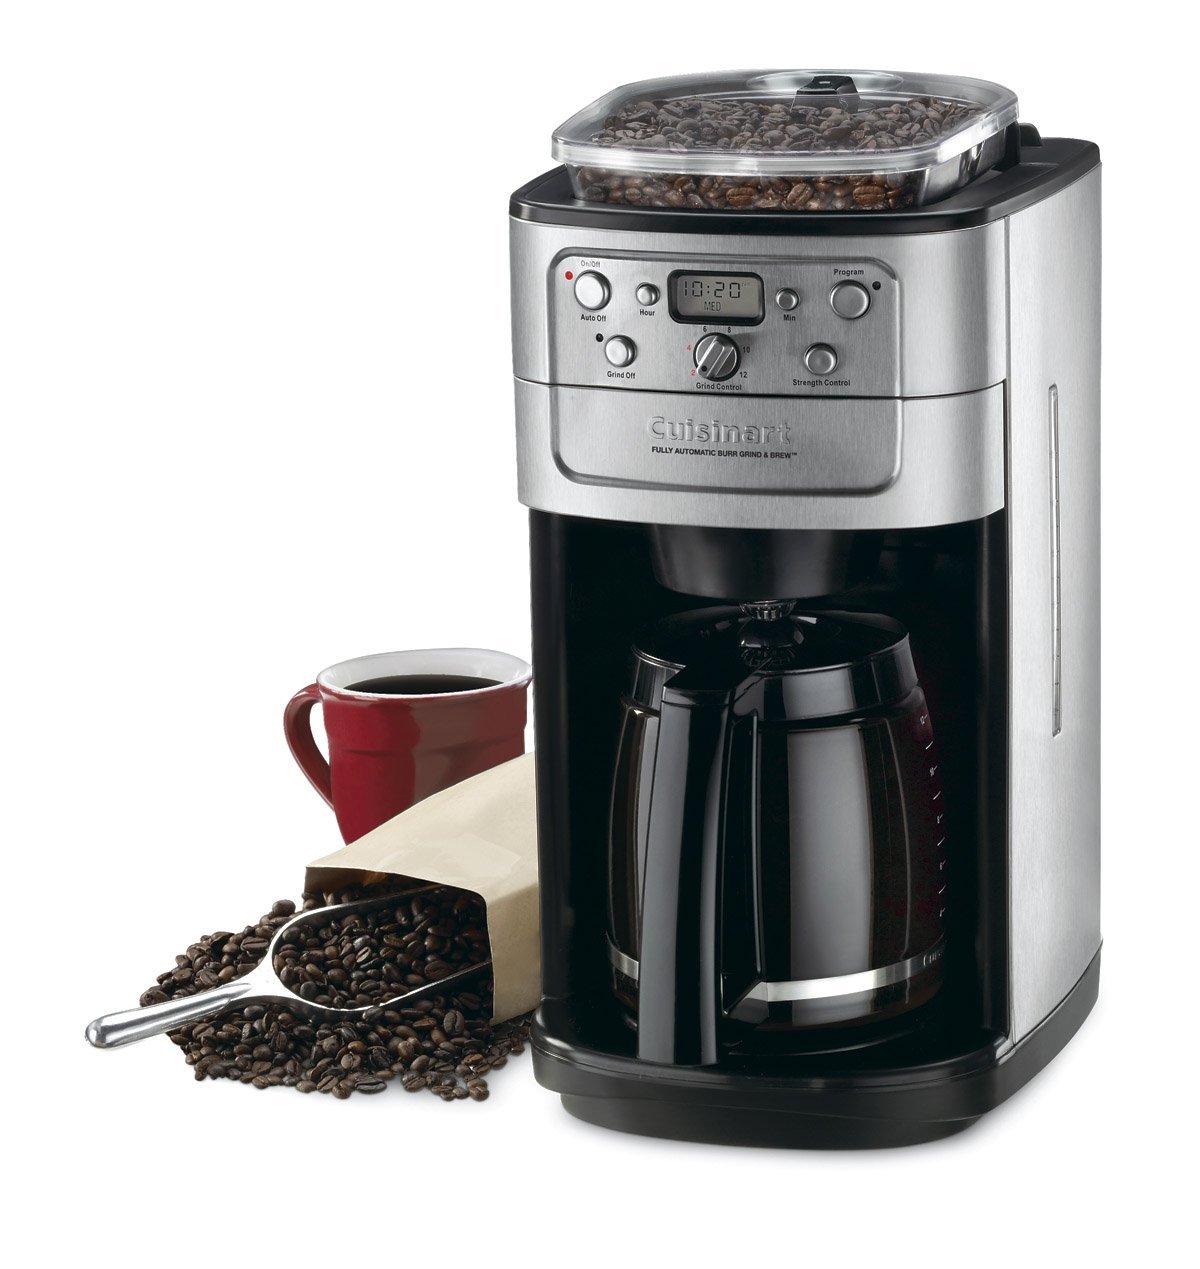 Cuisinart-美康雅 DGB-700BC 12杯全自动酿造研磨滤滴式咖啡机